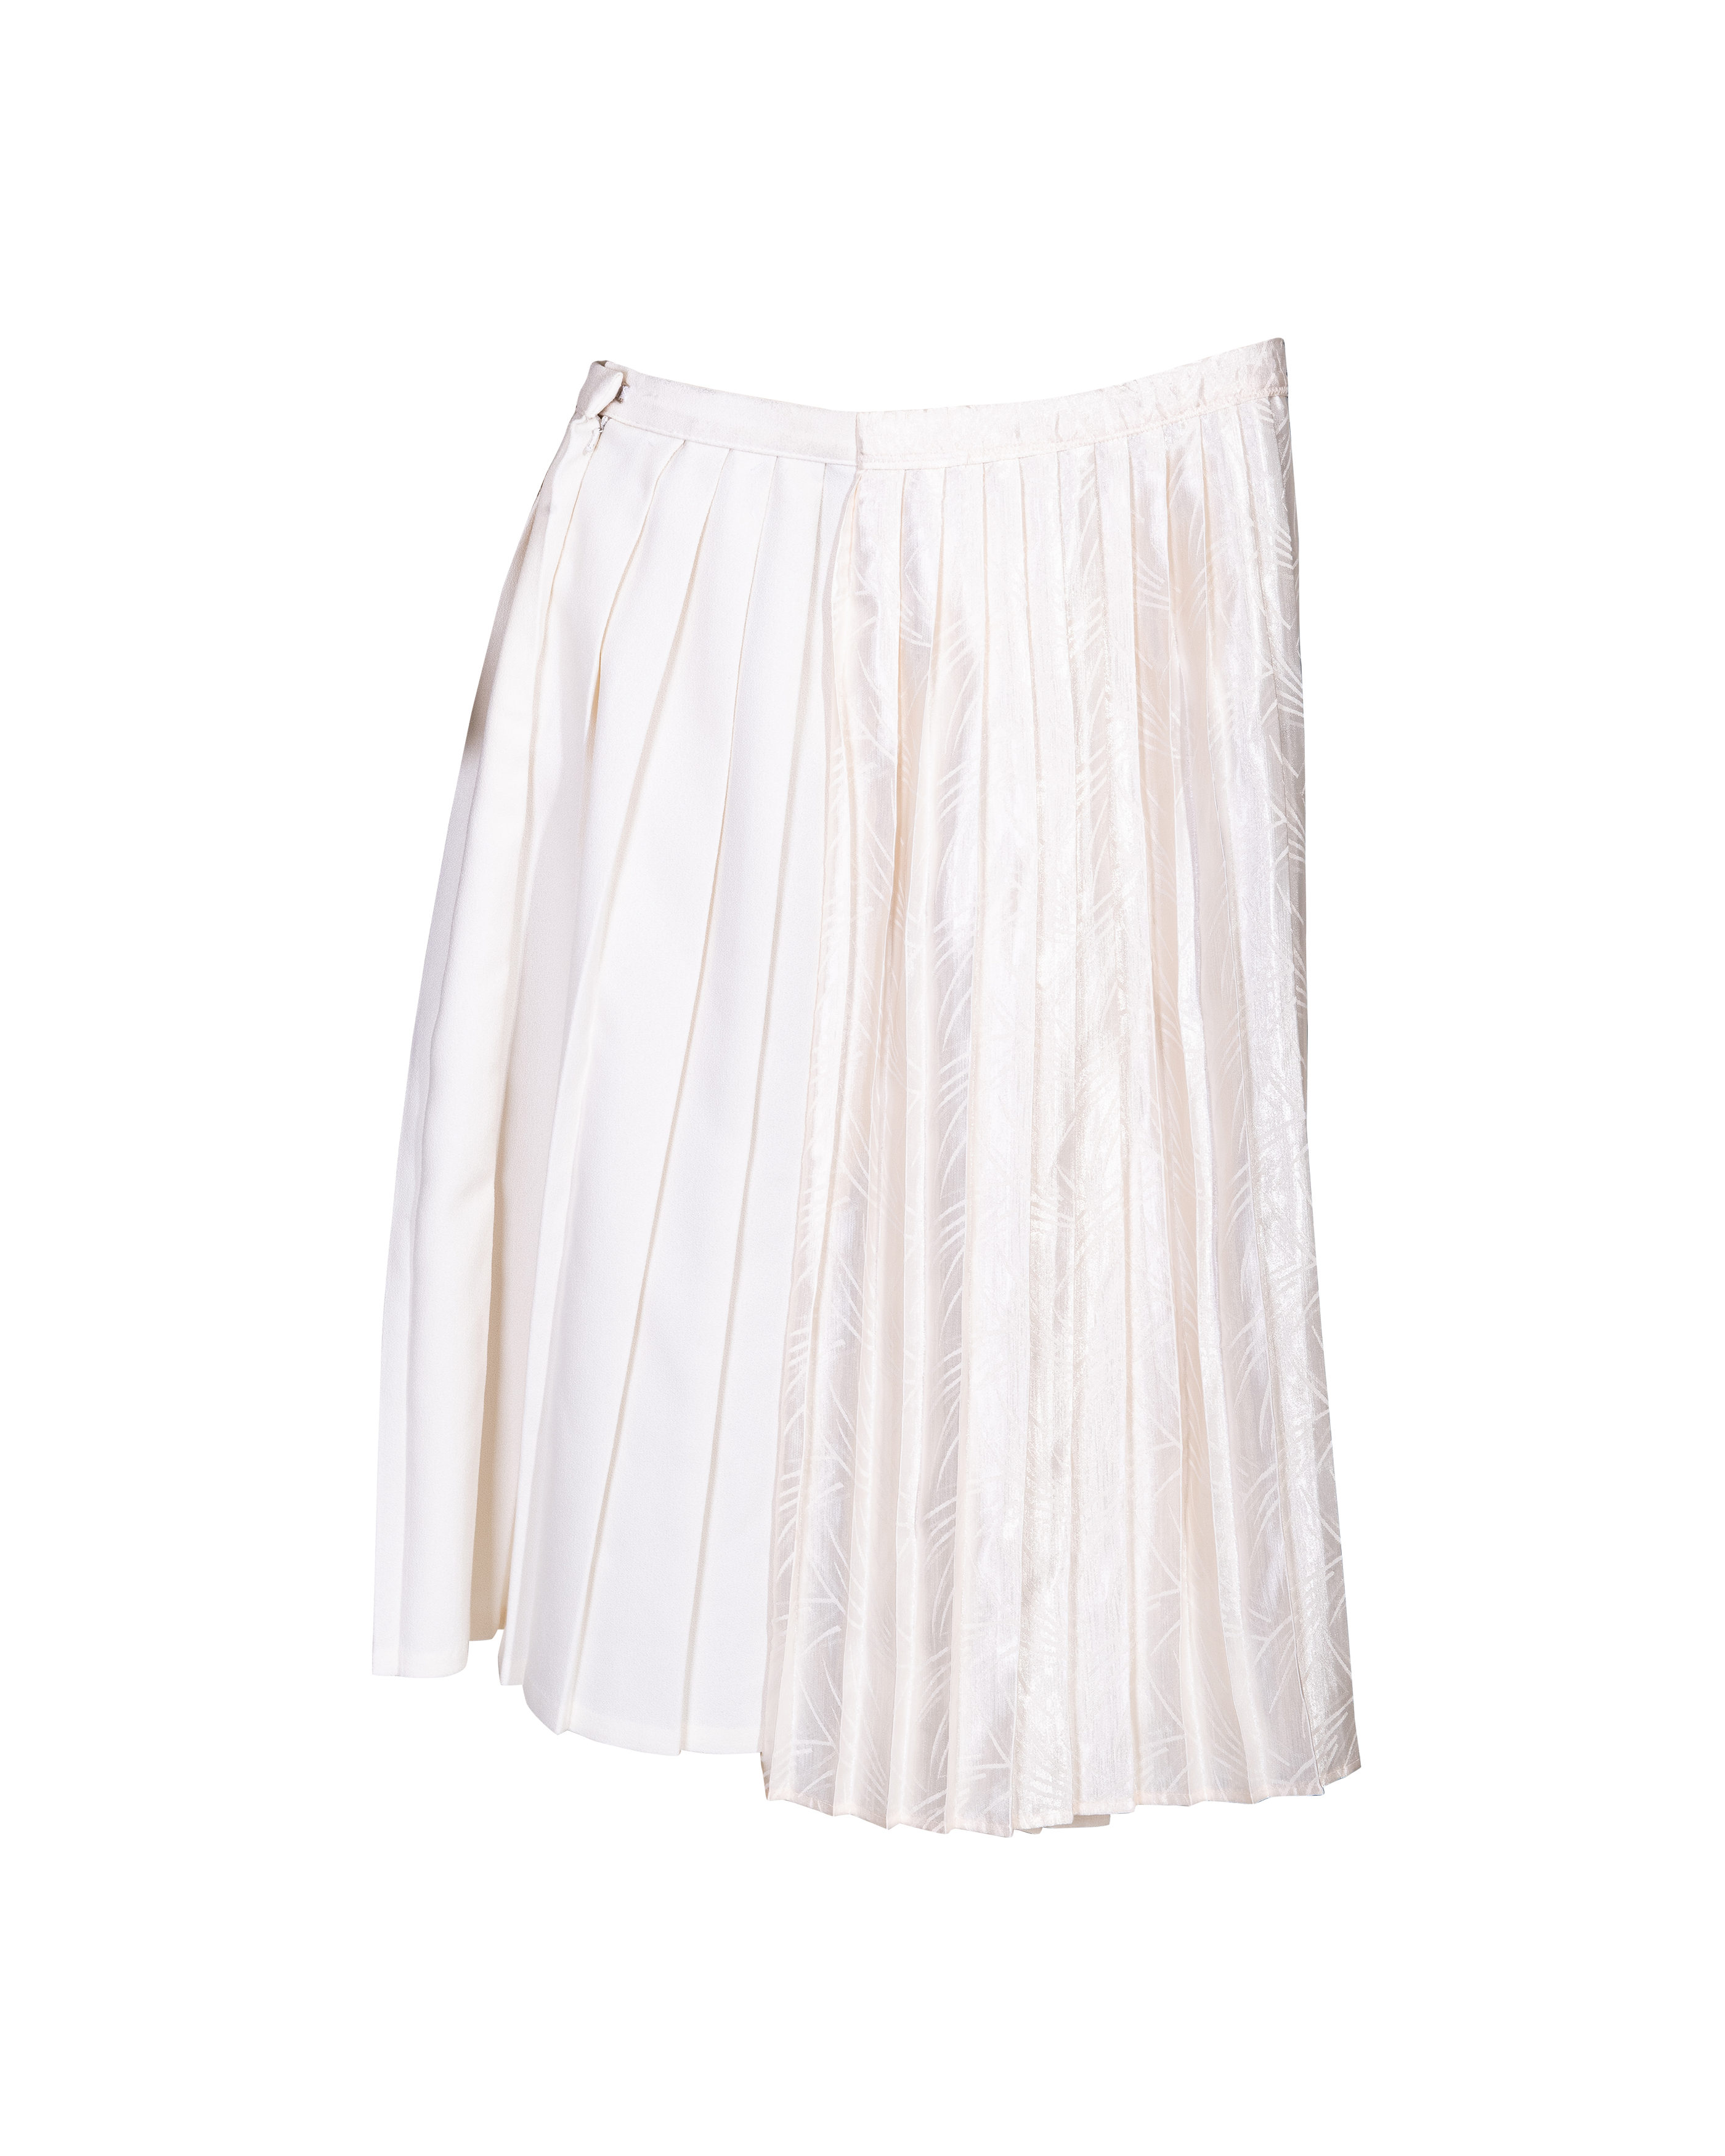 S/S 2001 One-of-One Artisanal Ecru Pleated Skirt